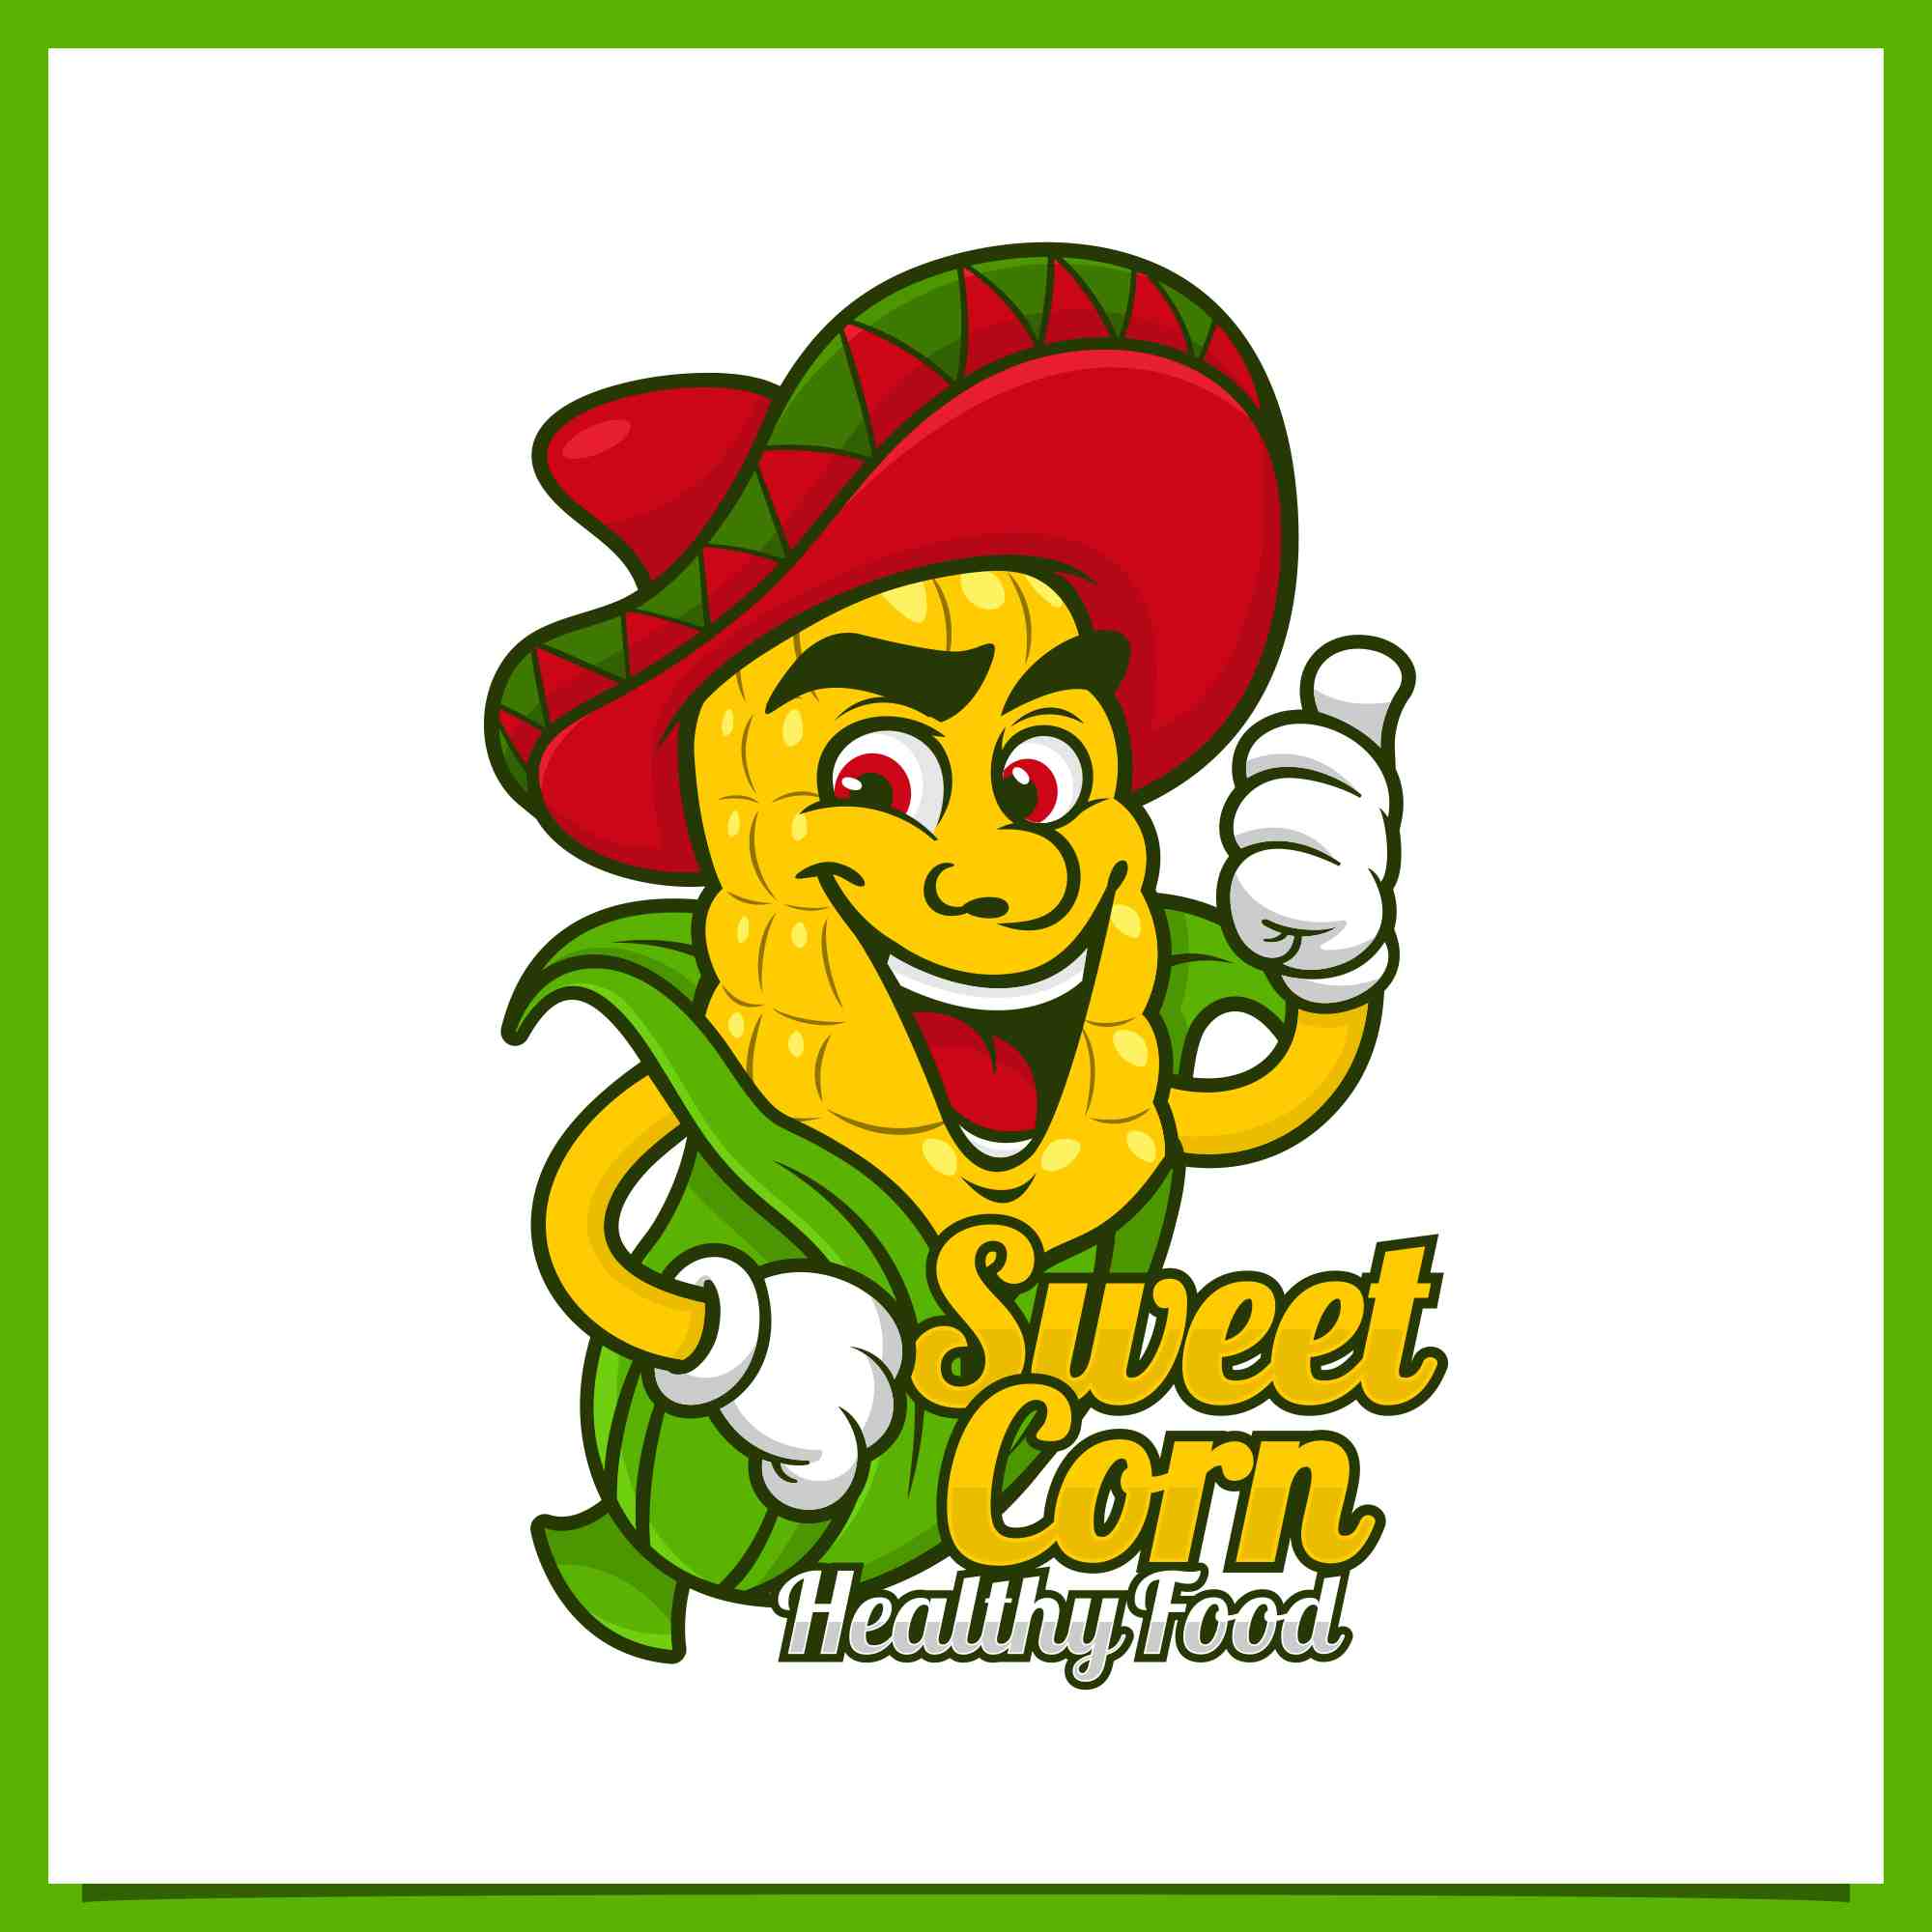 Set Sweetcorn healthy food mascot logo design - $6 preview image.